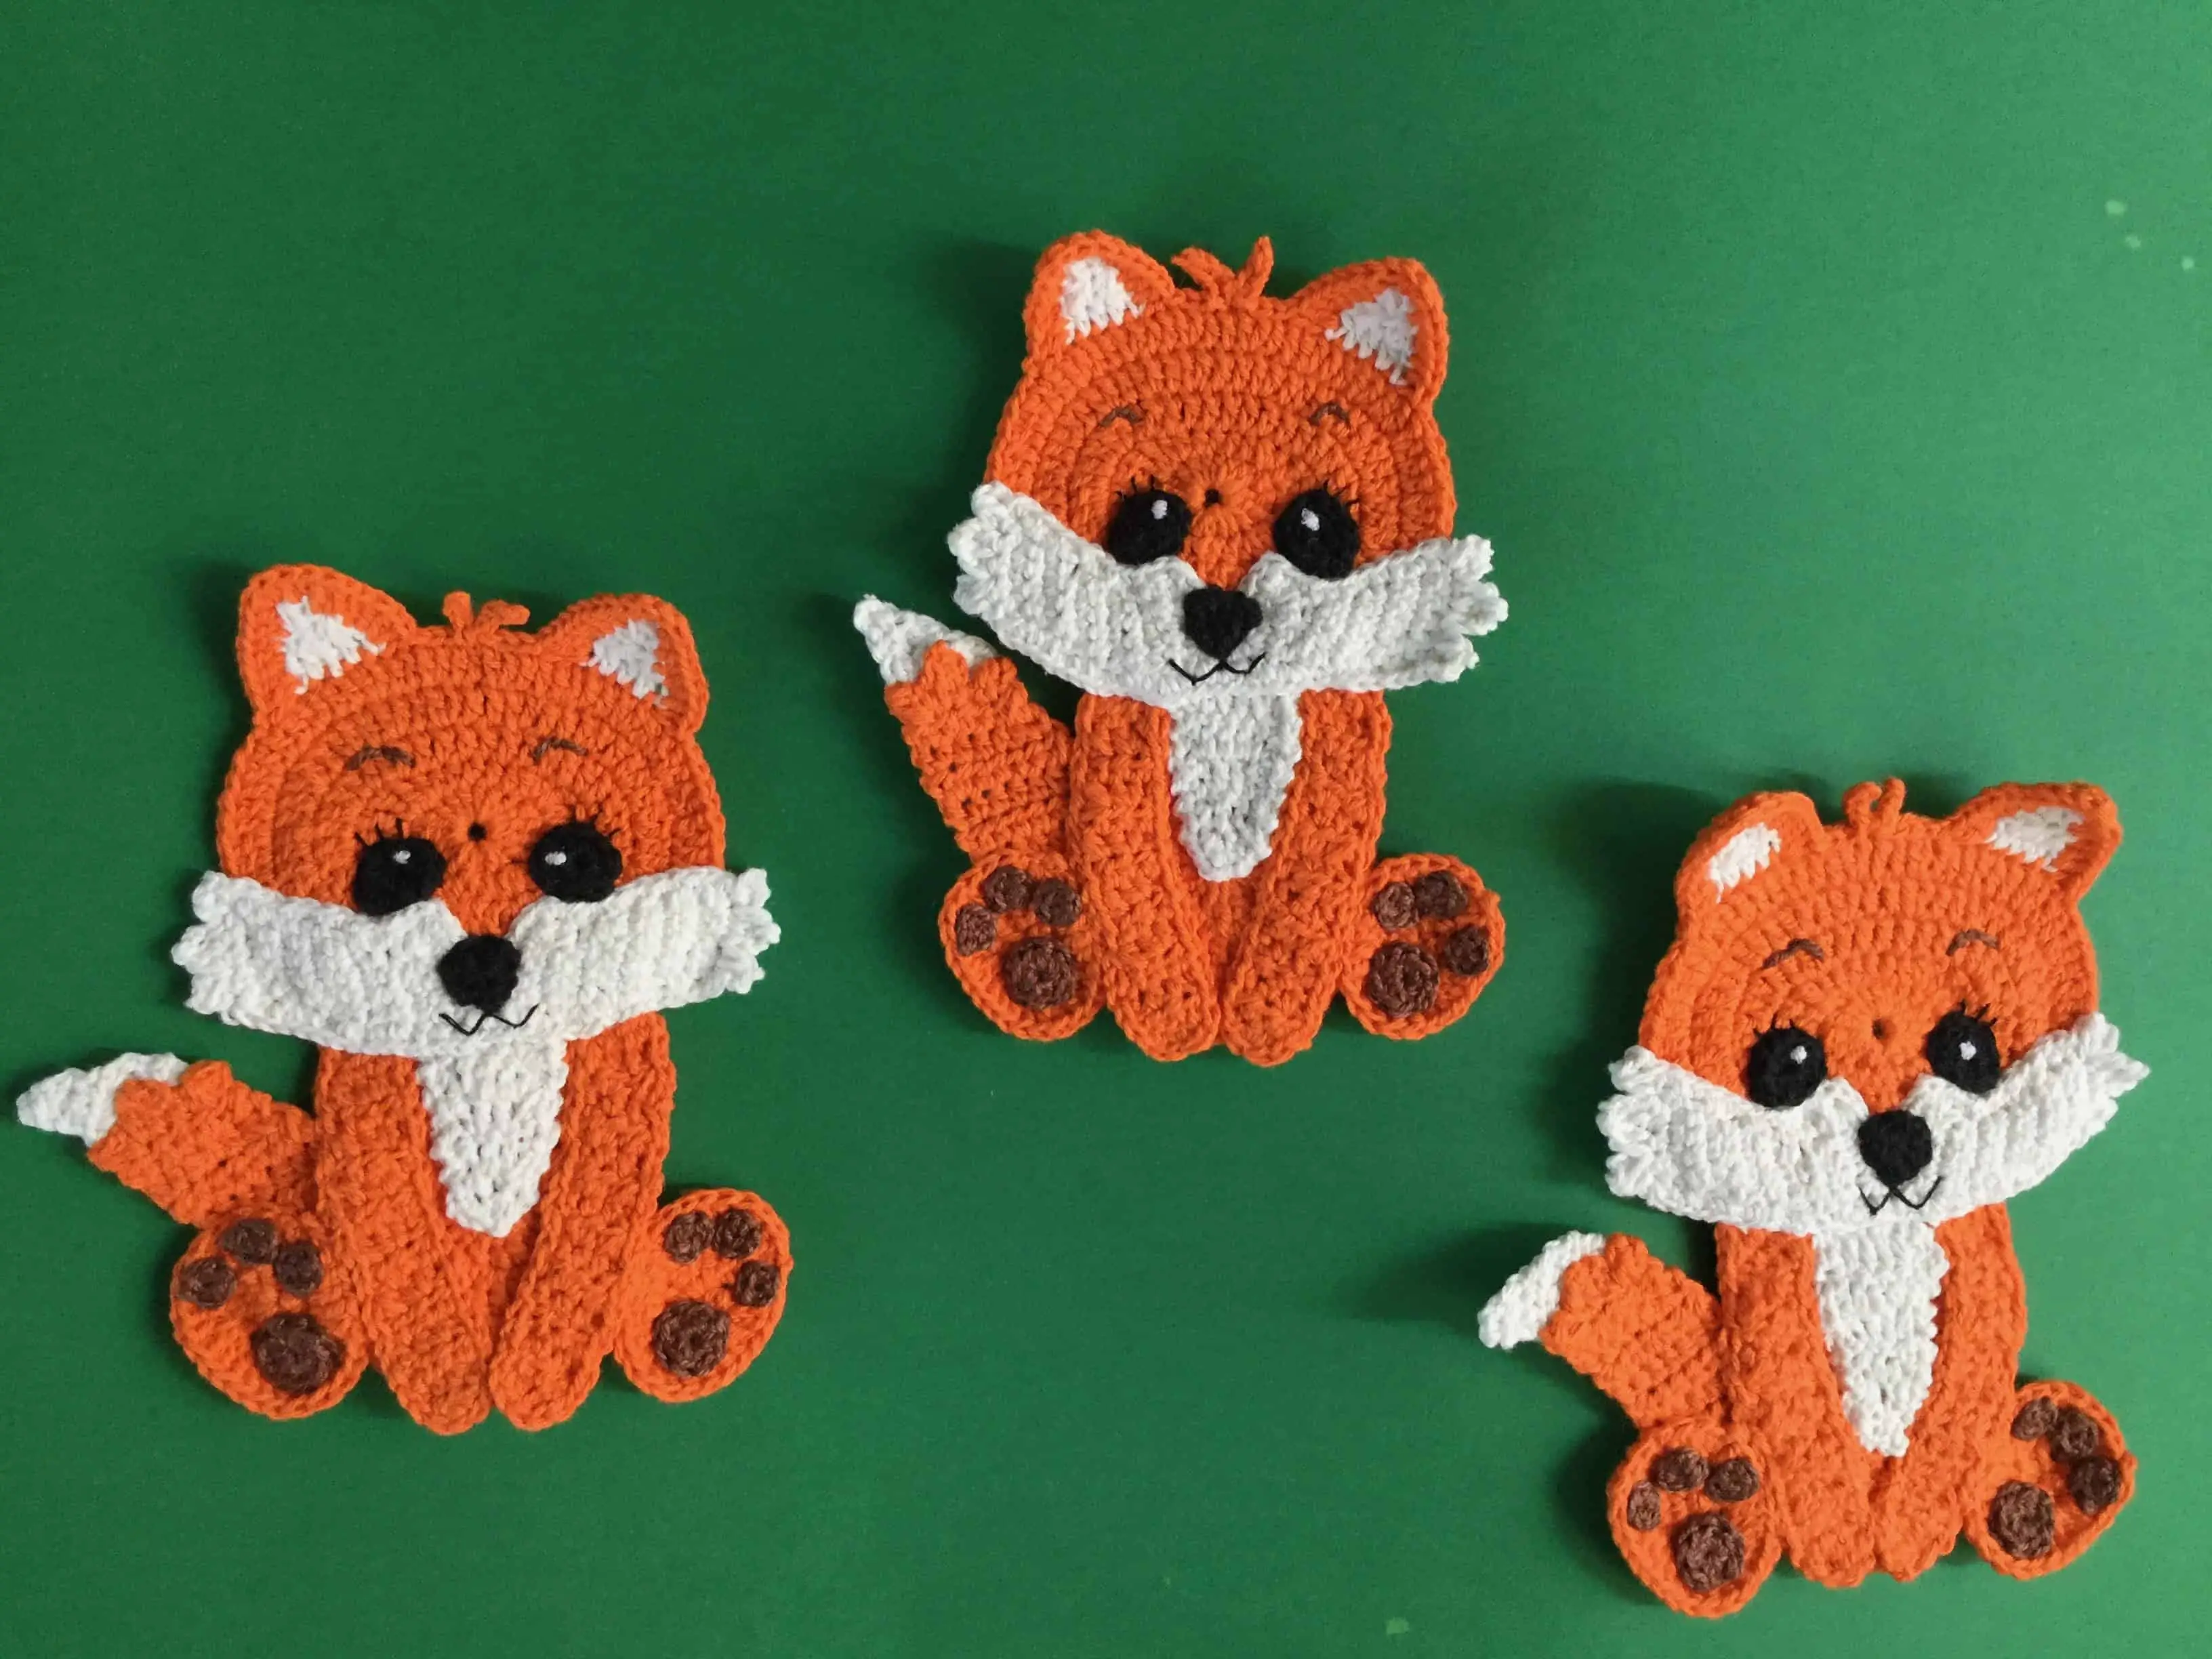 Finished crochet baby fox group landscape